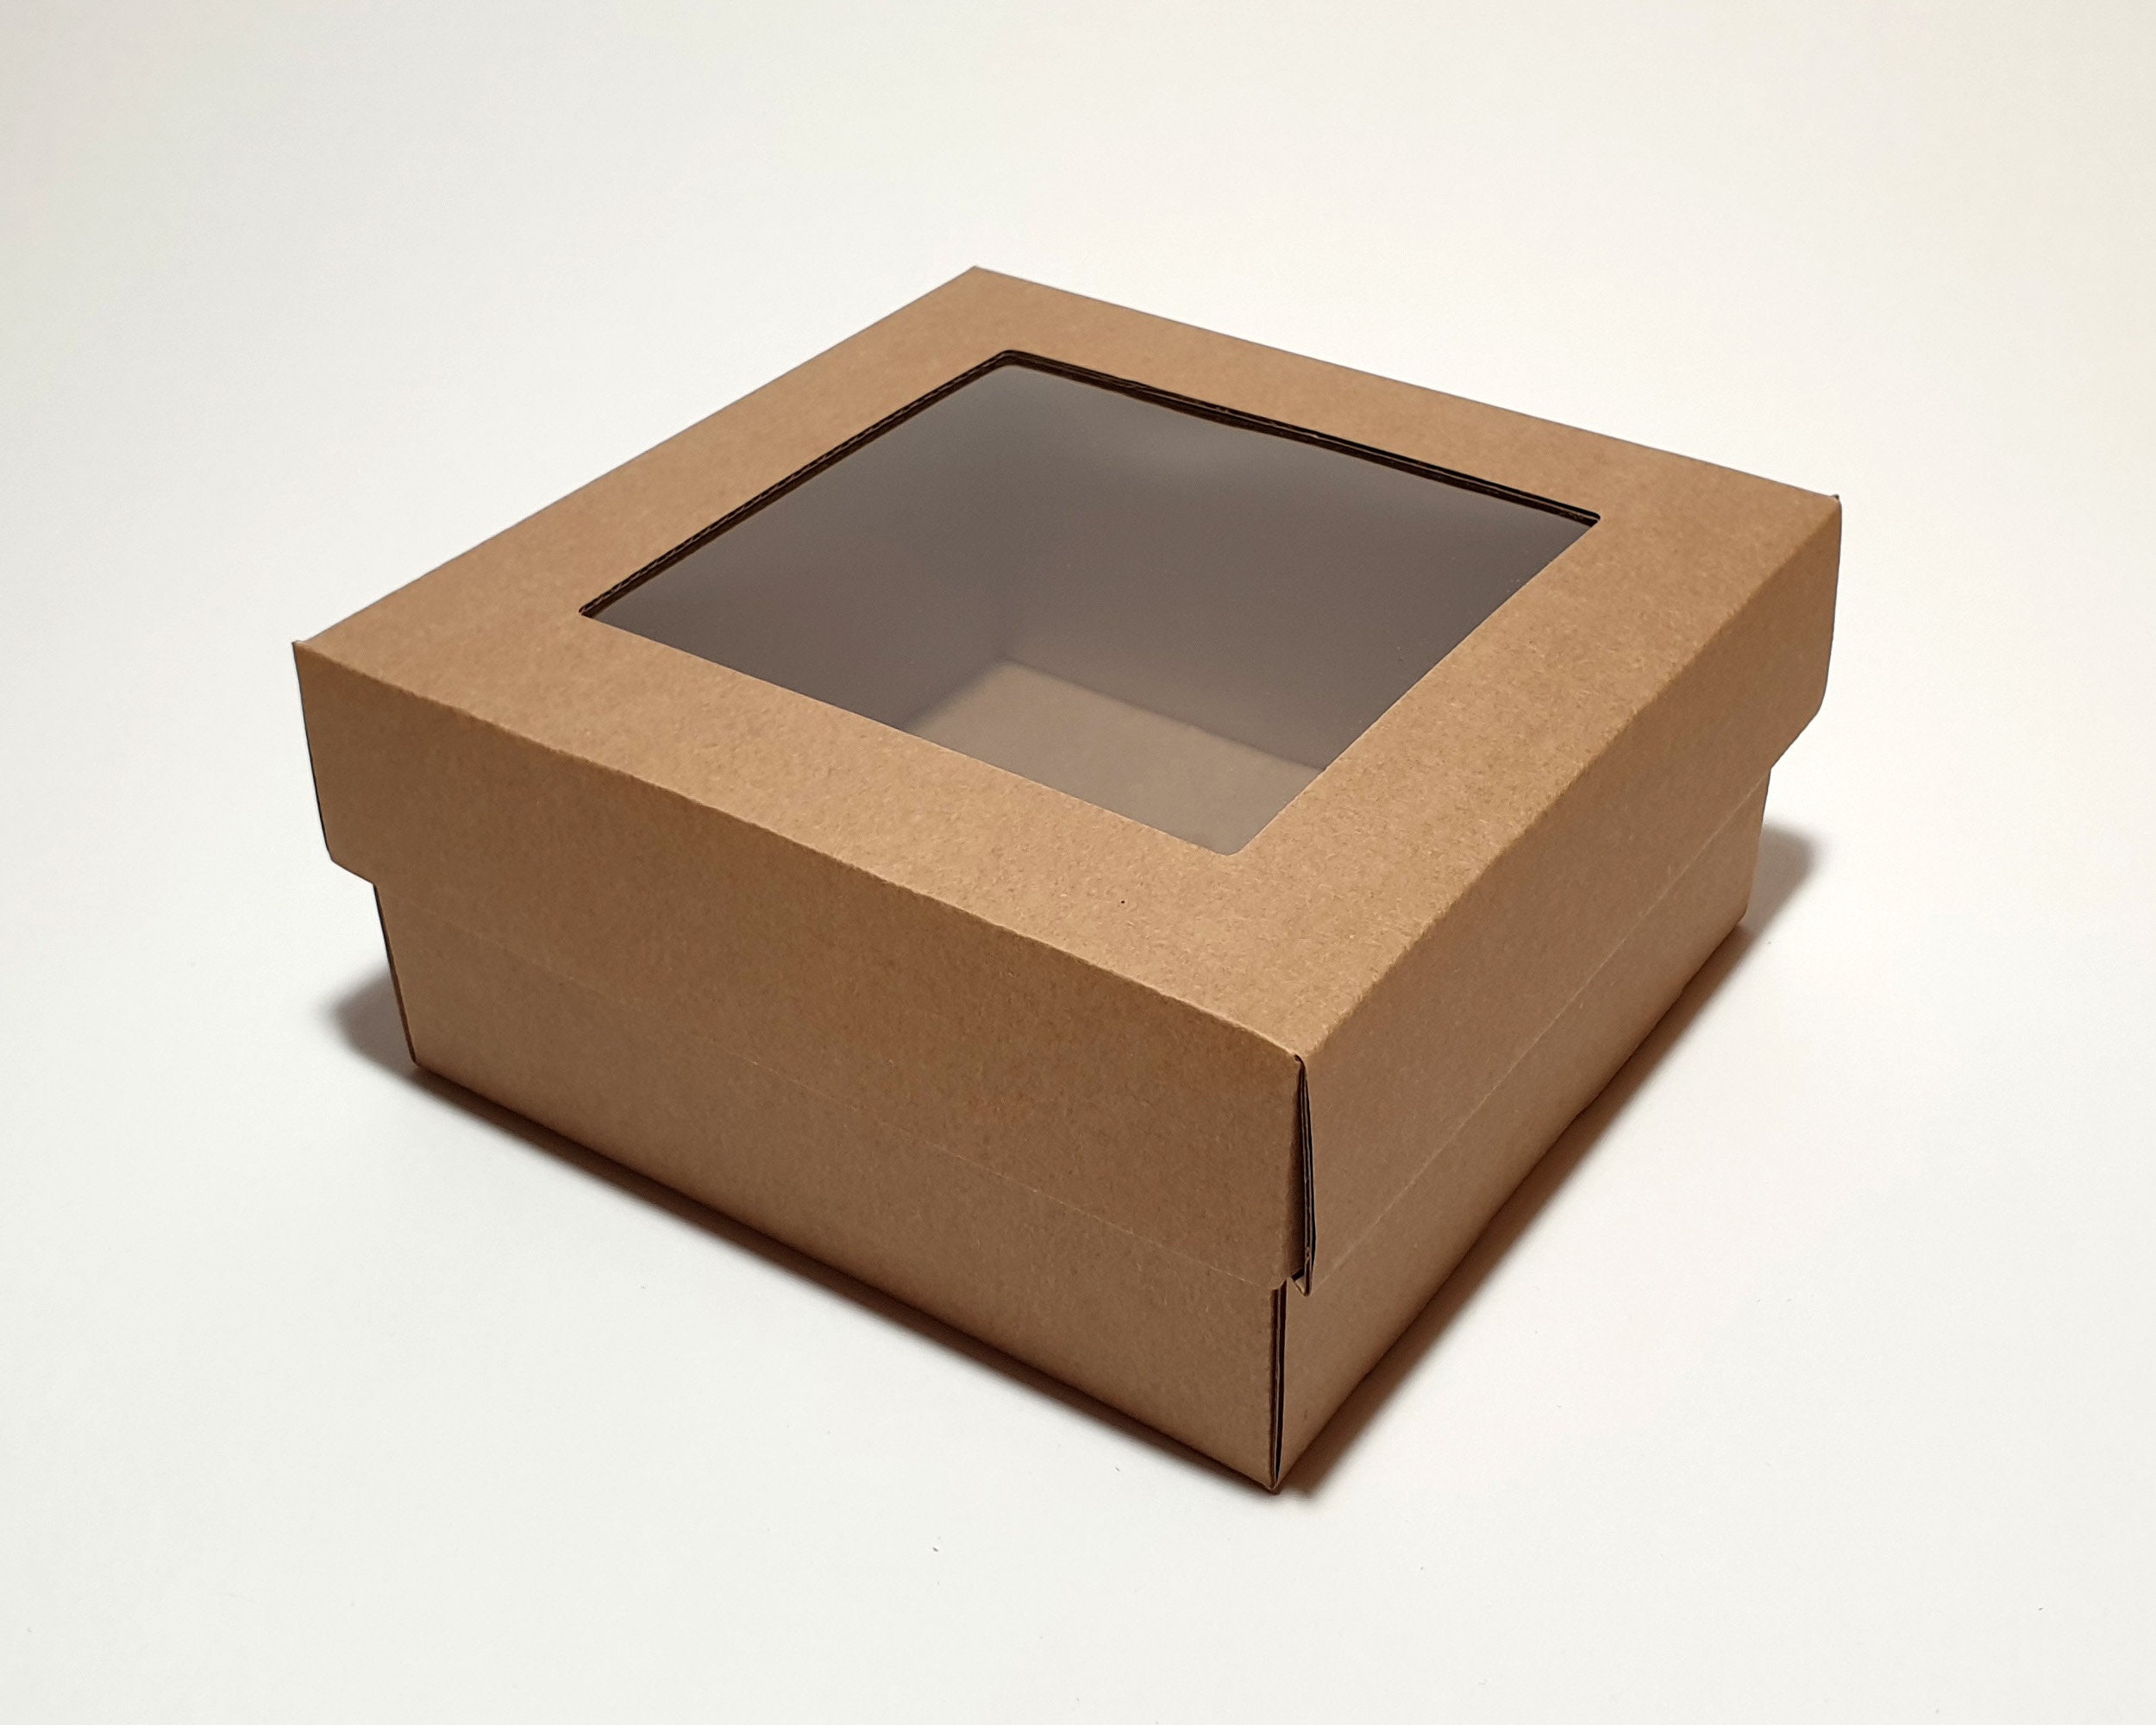 Bulk Buy 2 Inch Mini Square Paper Mache Boxes with Lids 3 Dozen -36 Boxes